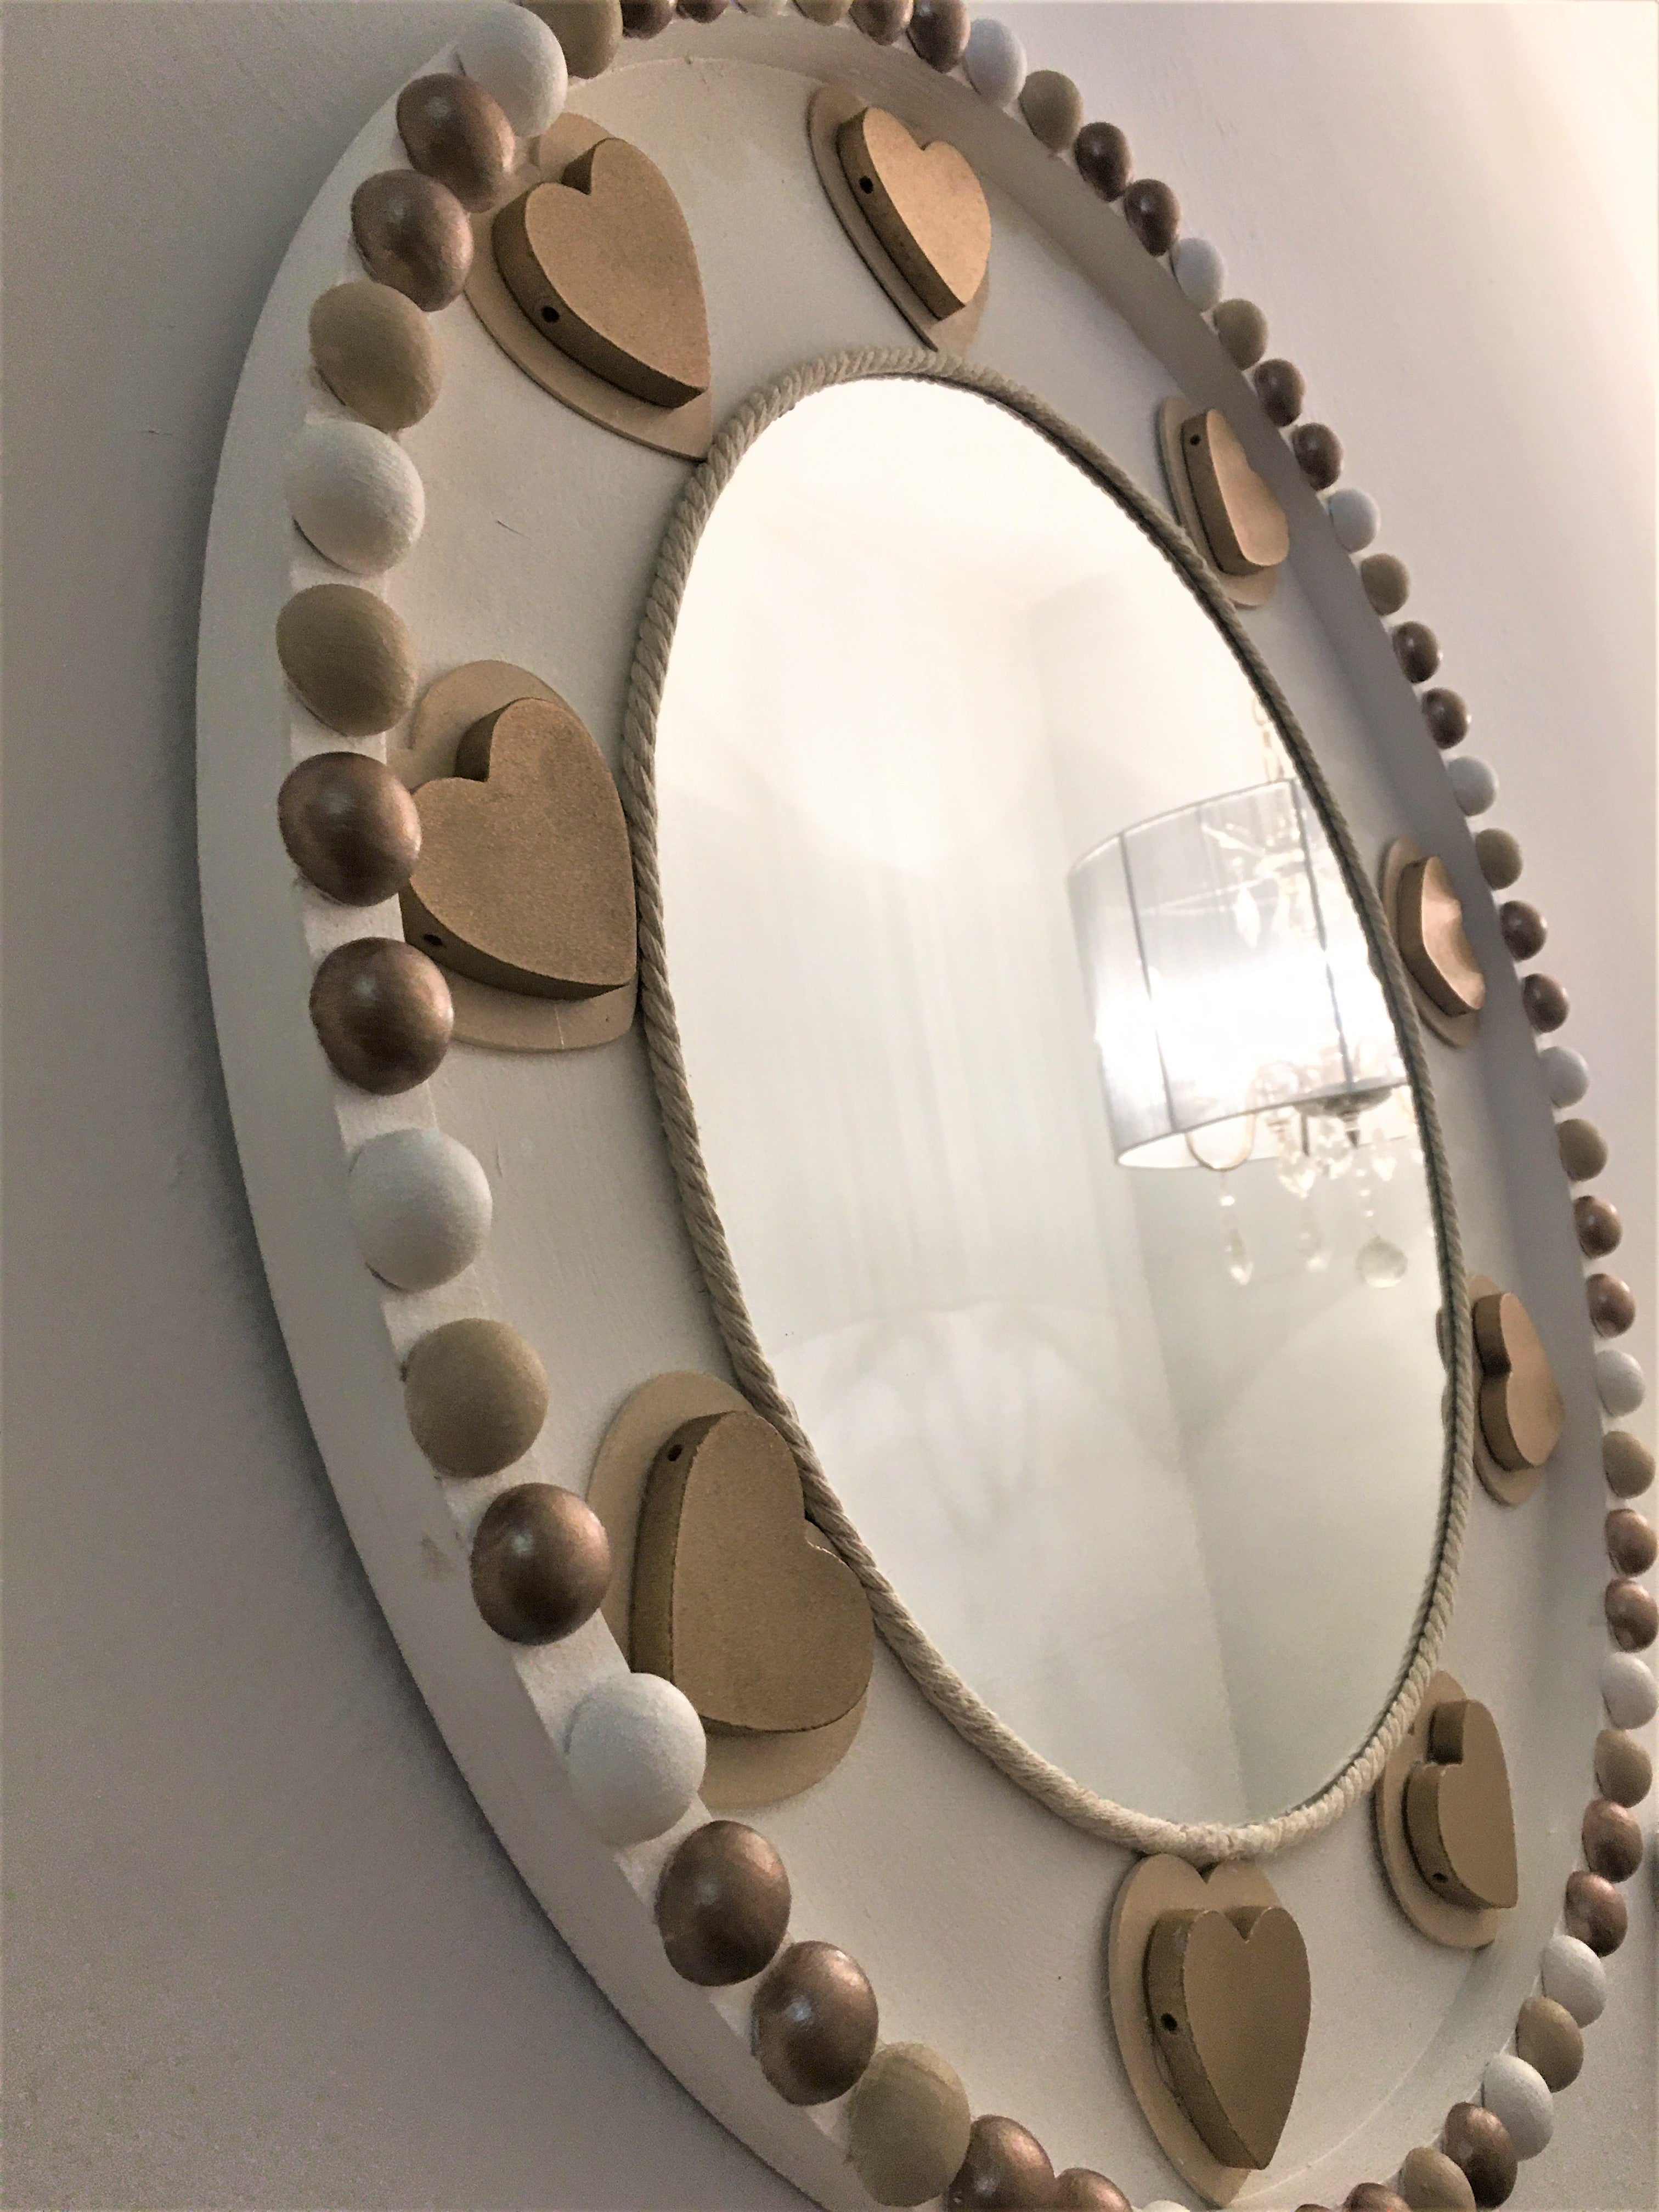 Heart Wall Mirror, Nautical Mirror, Coastal Mirror 24" Round